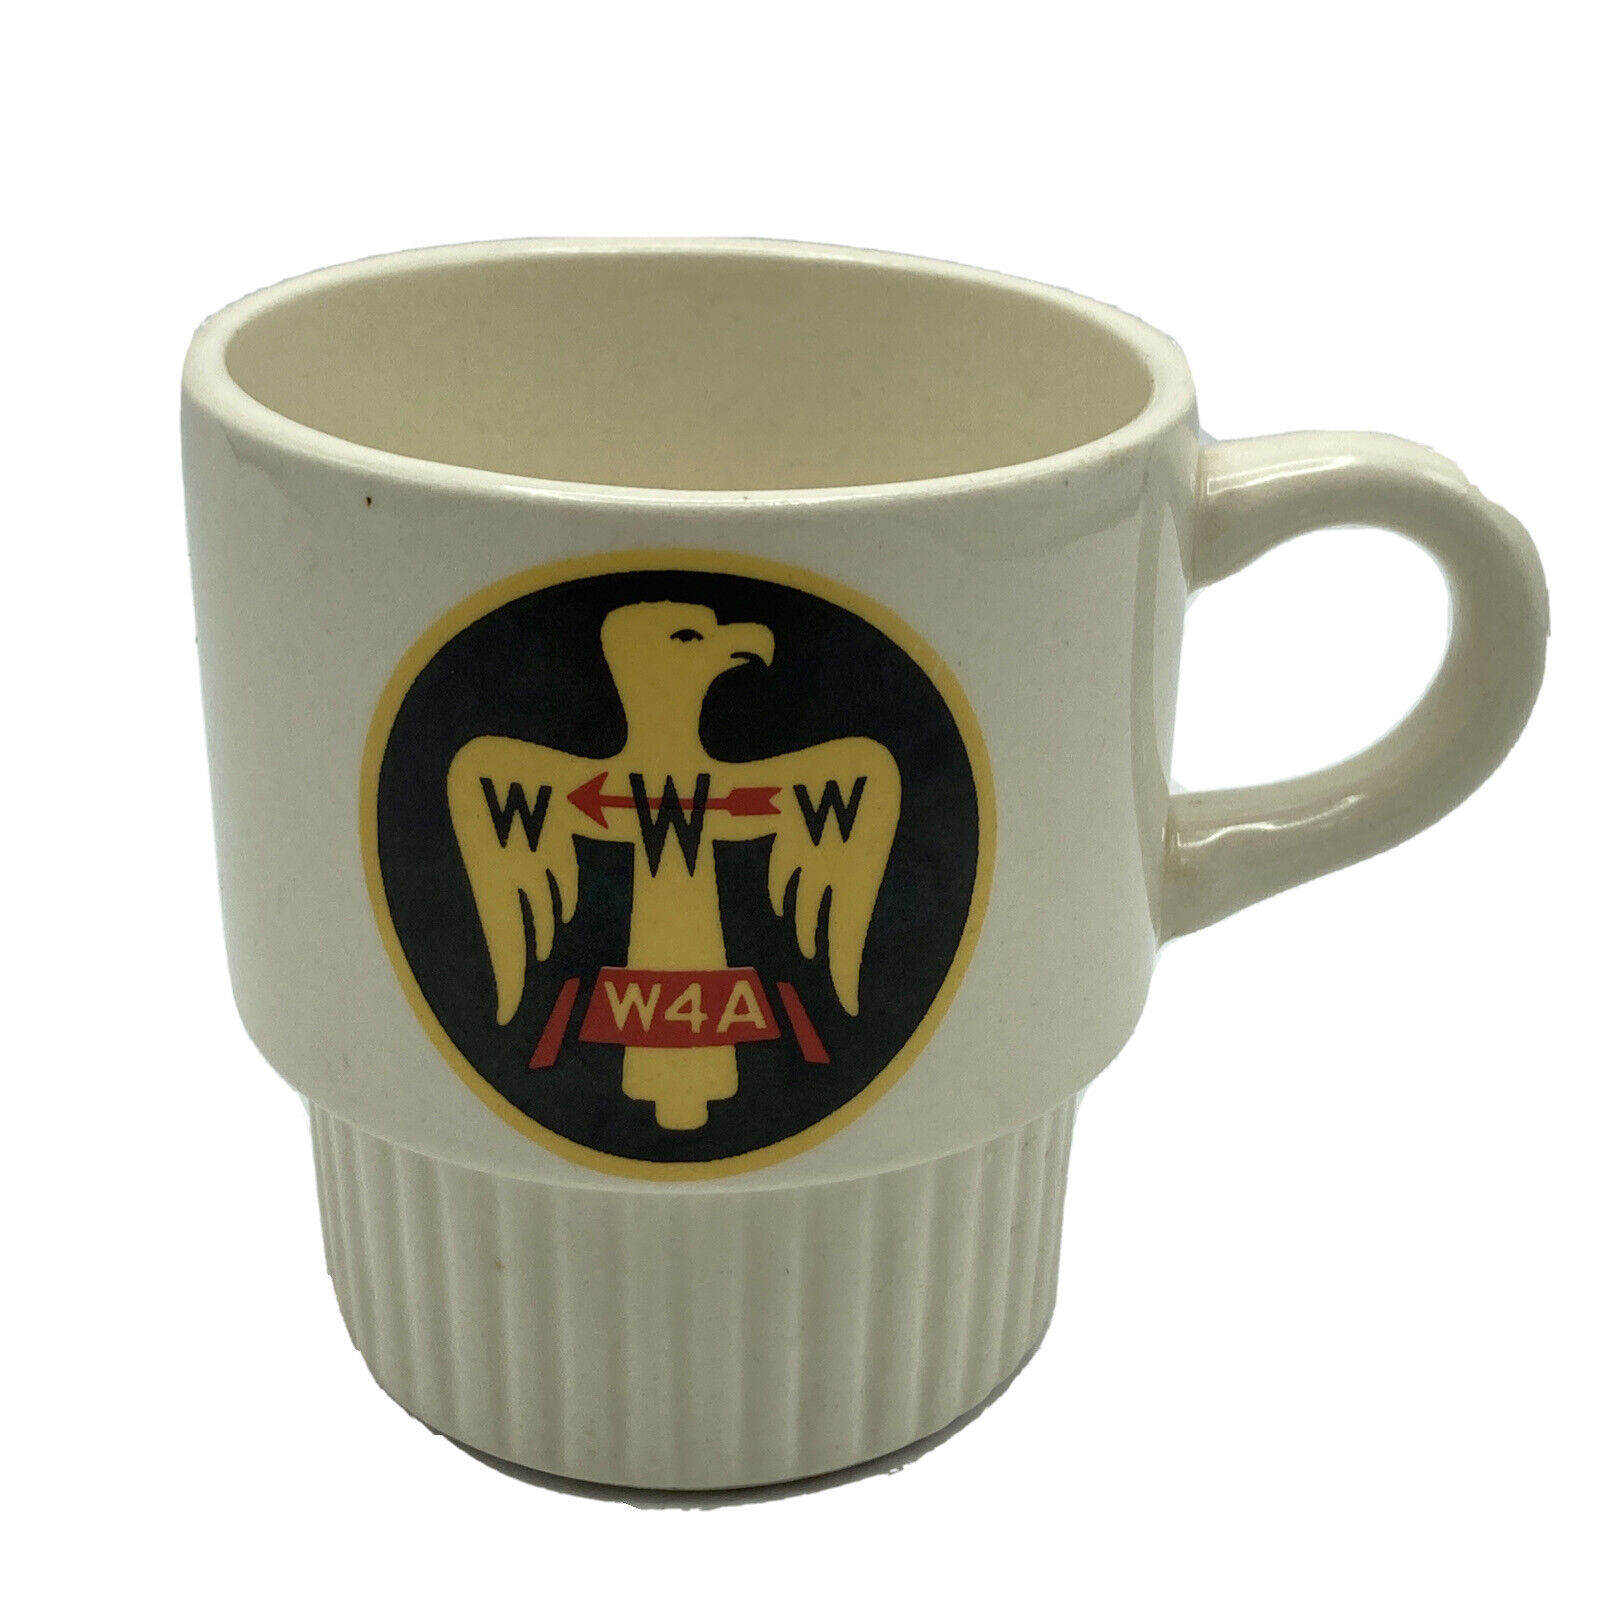 BSA WWW W4A Boy Scouts Mug Order Of The Arrow Vintage 1970s 